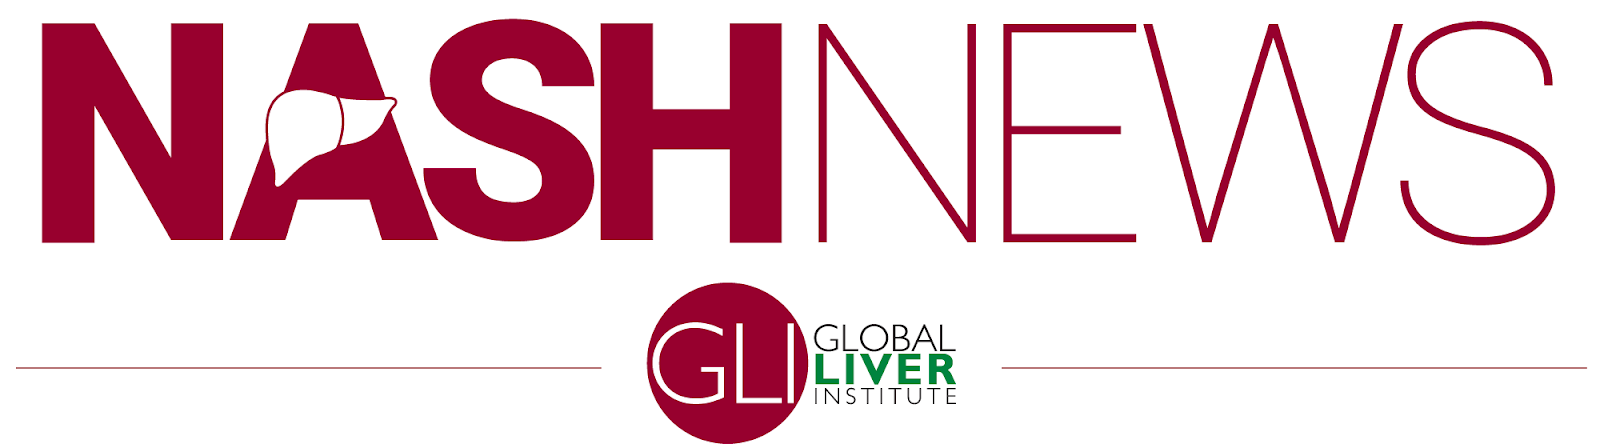 NASH NEWS Logo